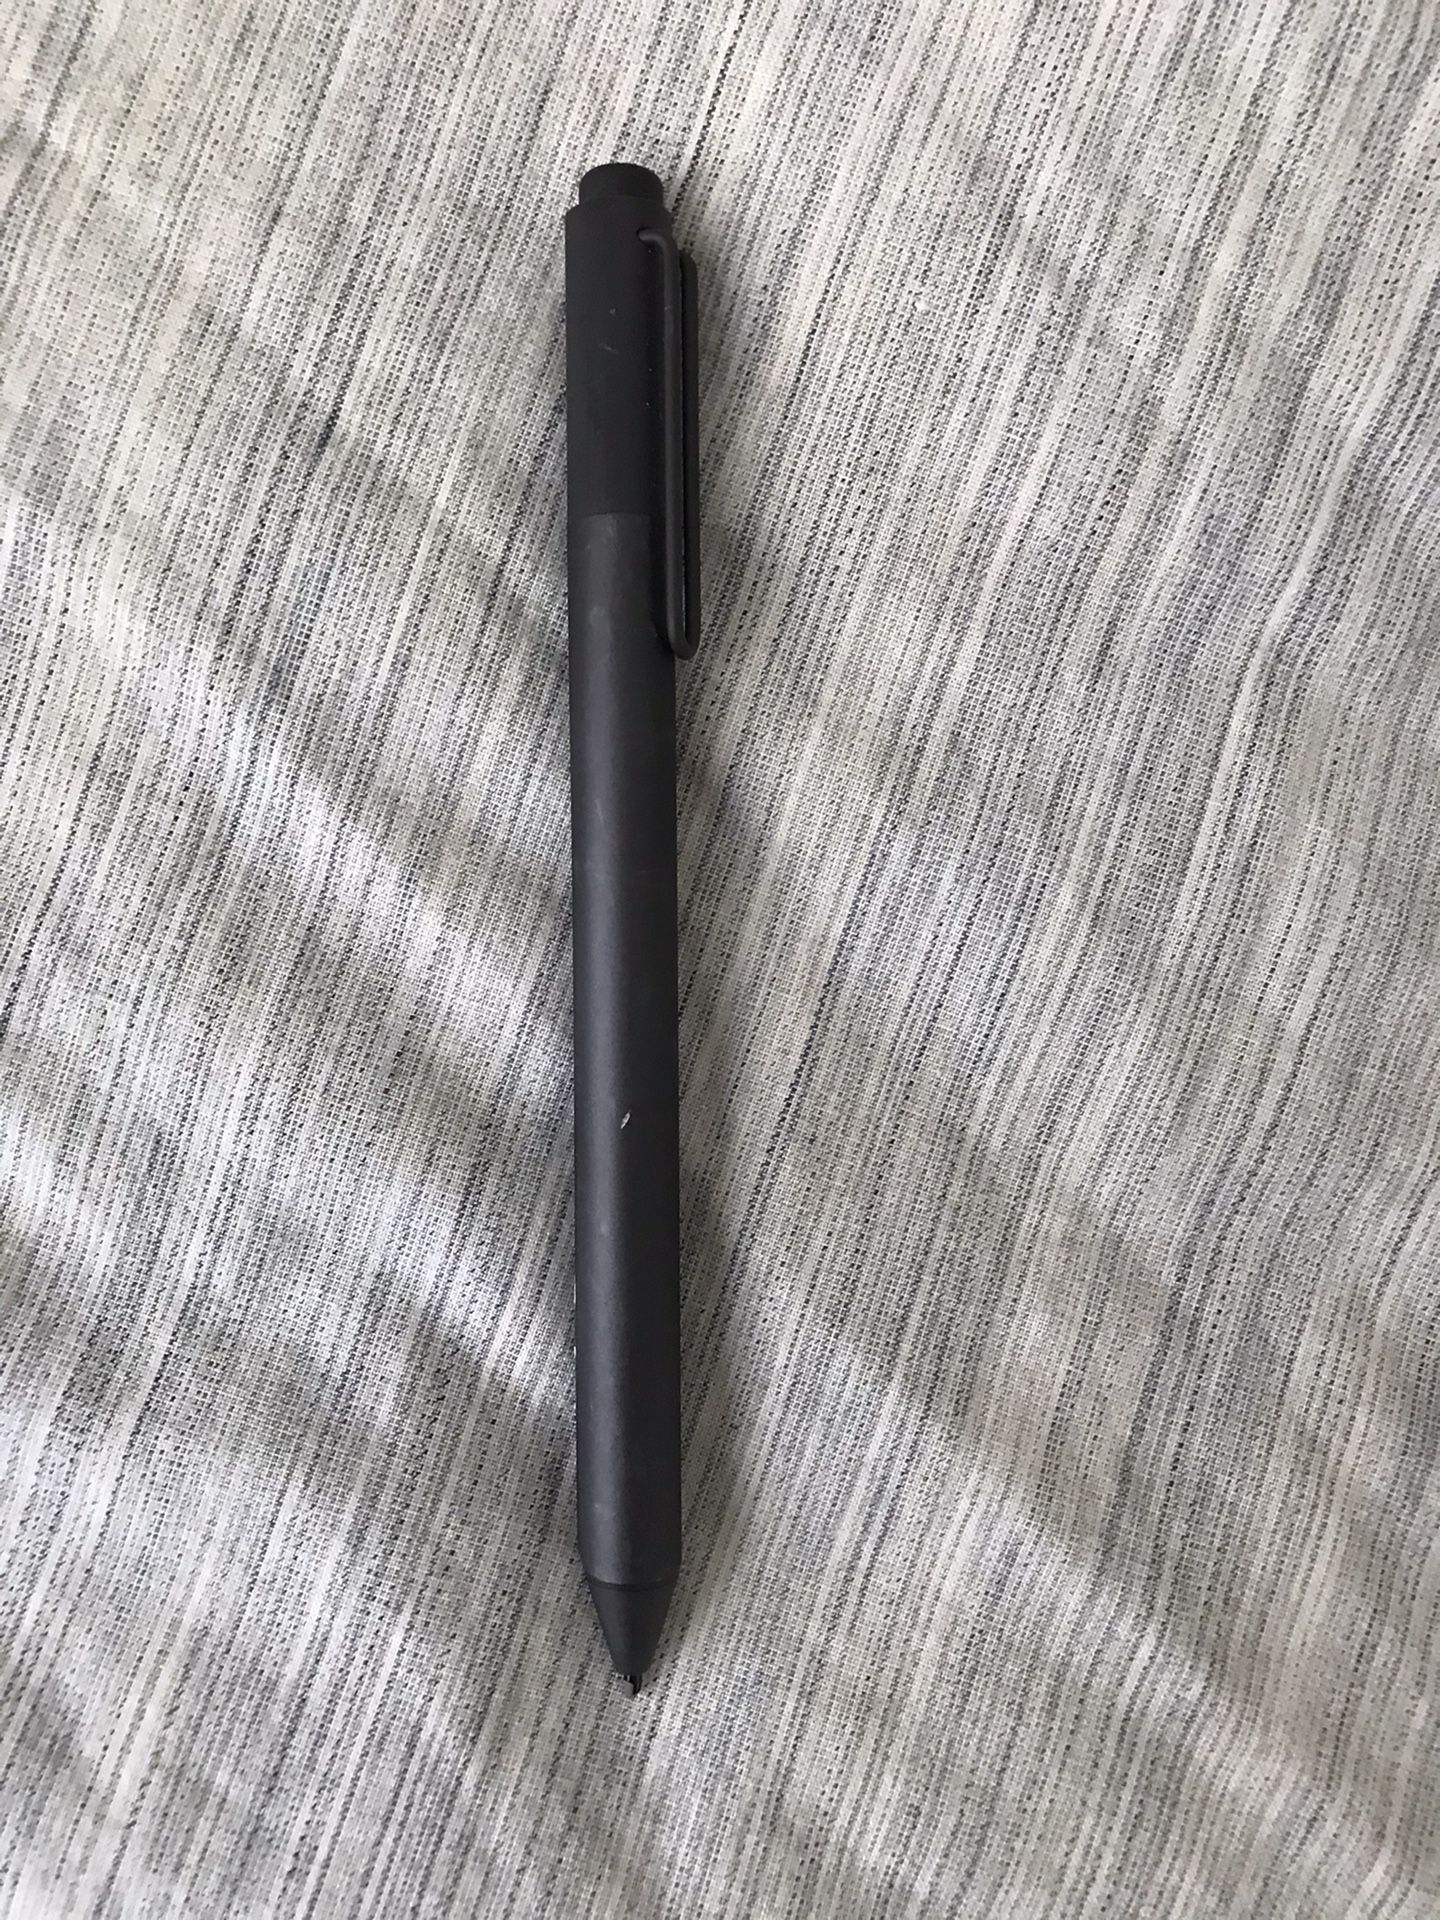 Microsoft surface pen black